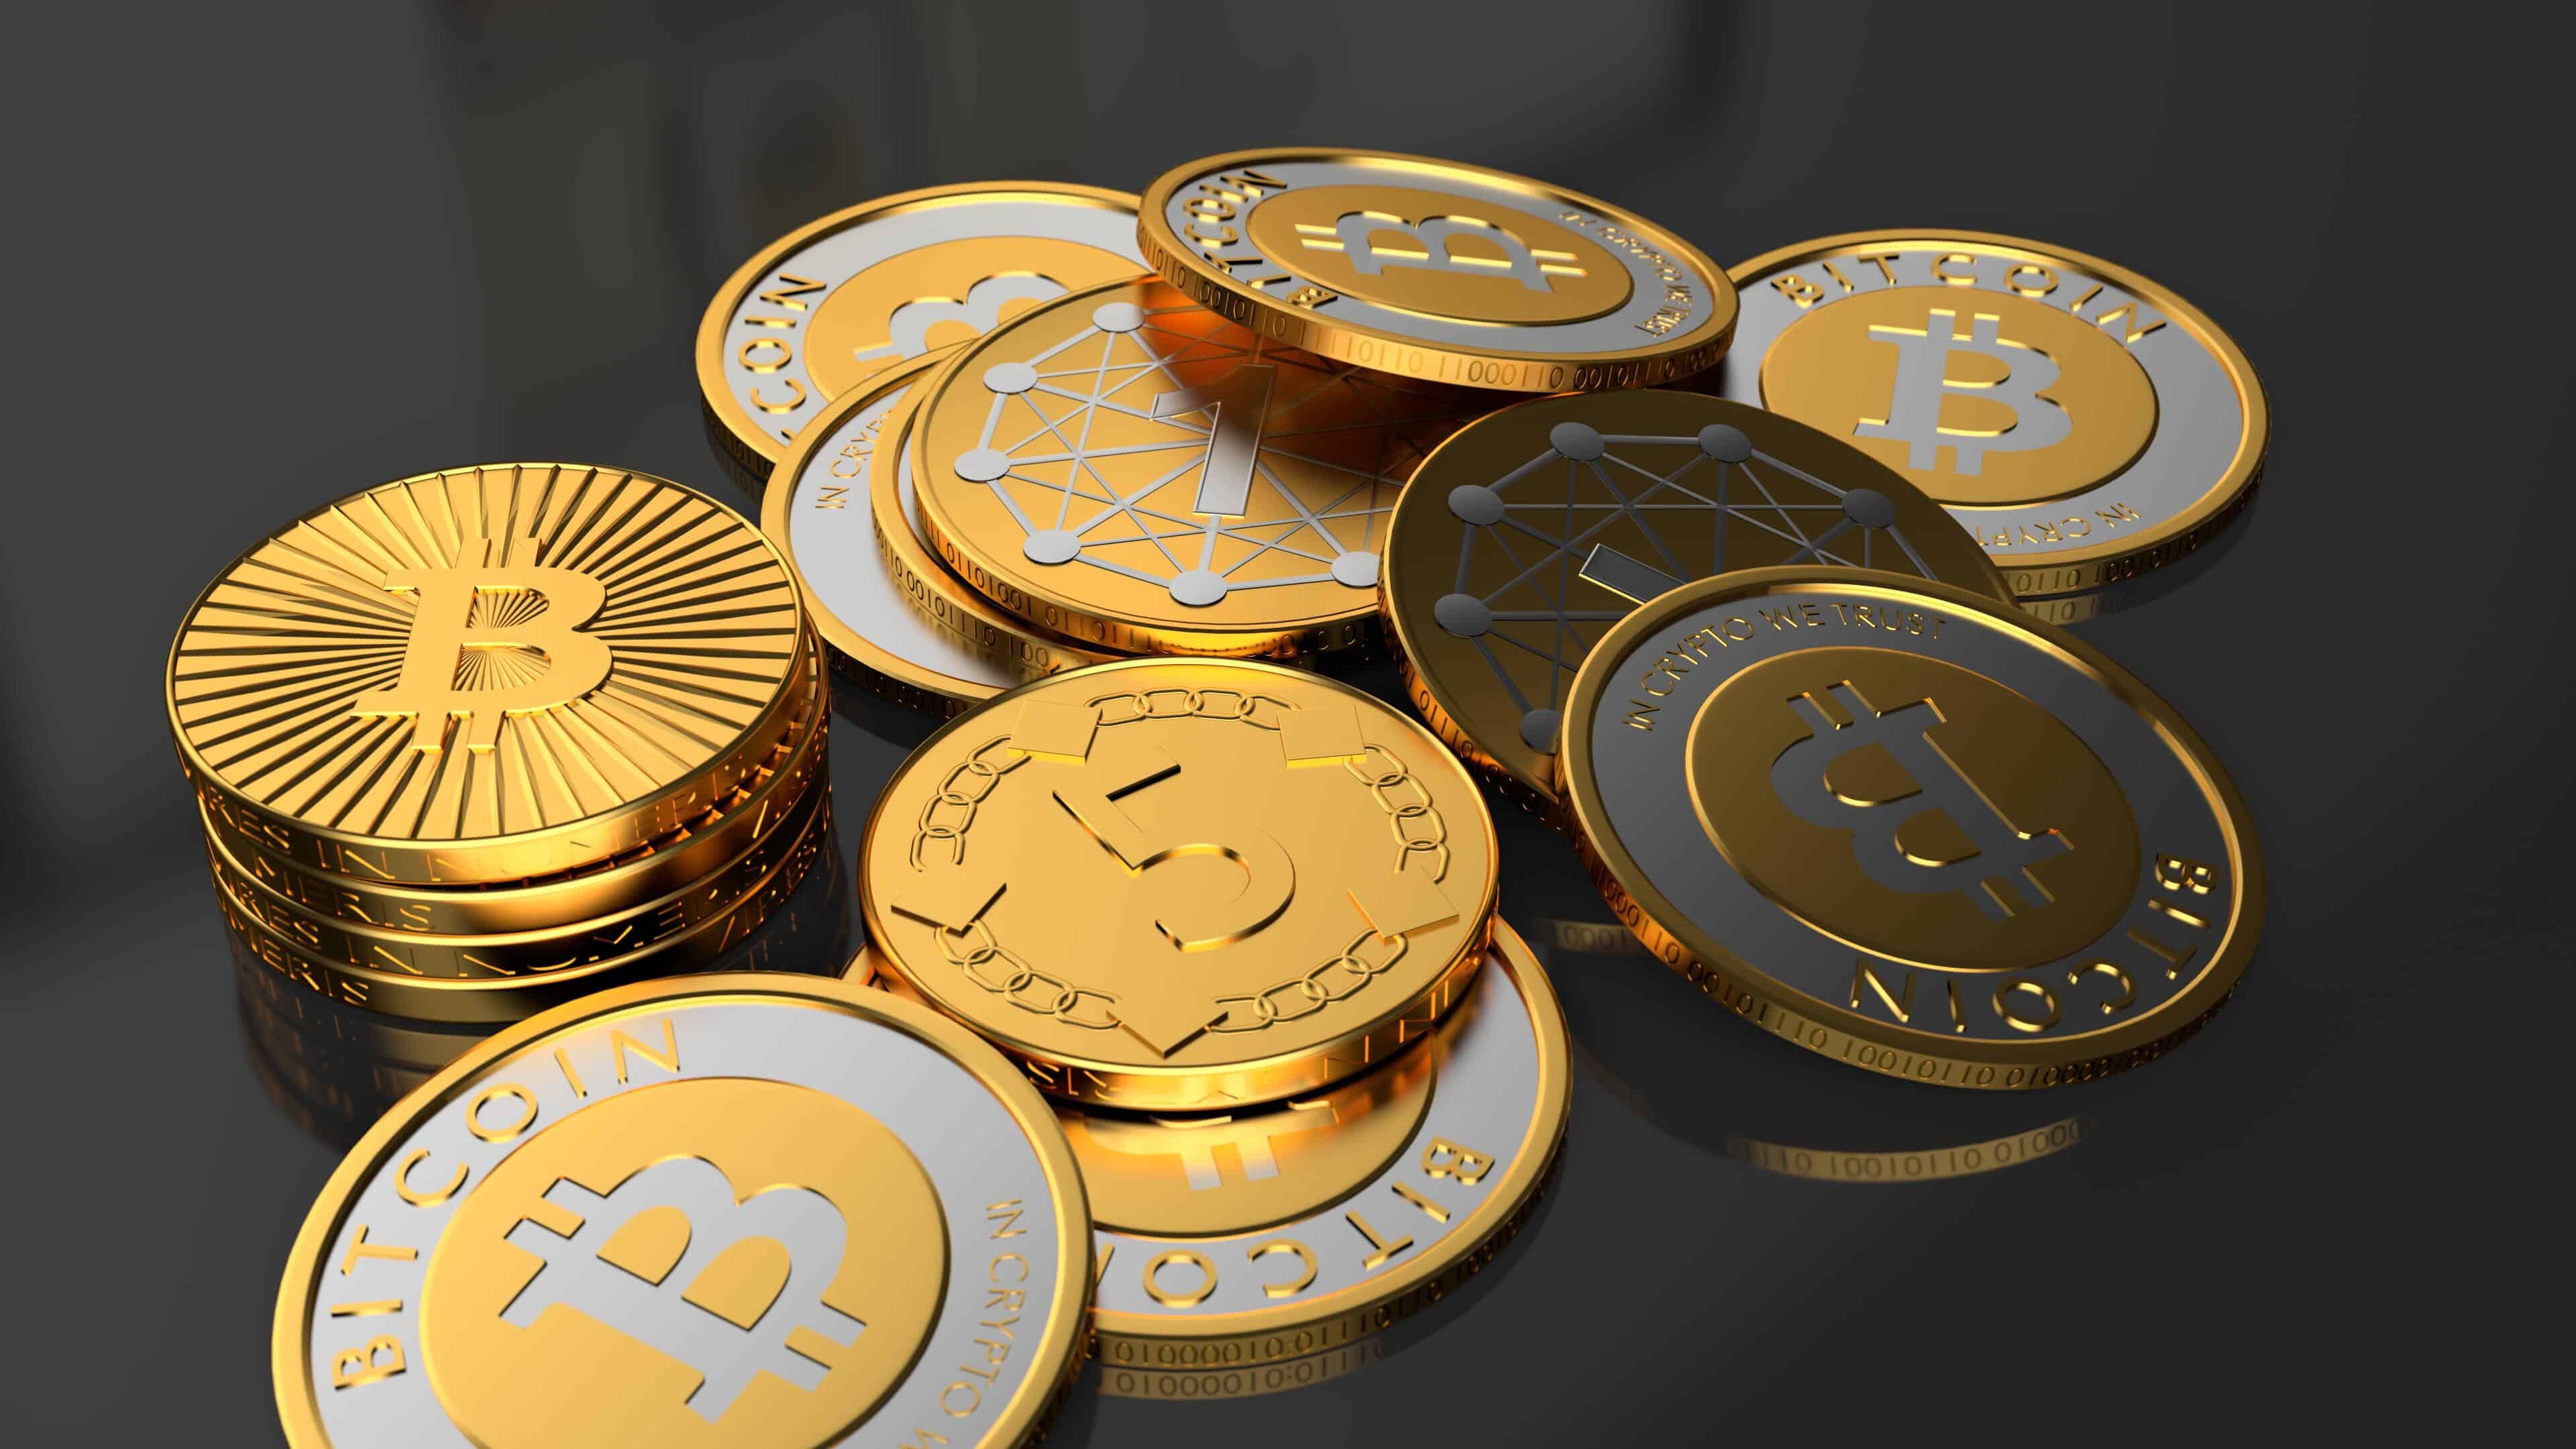 Bitcoin coins, Ultra HD wallpapers, Digital currency revolution, Cutting-edge technology, 3840x2160 4K Desktop